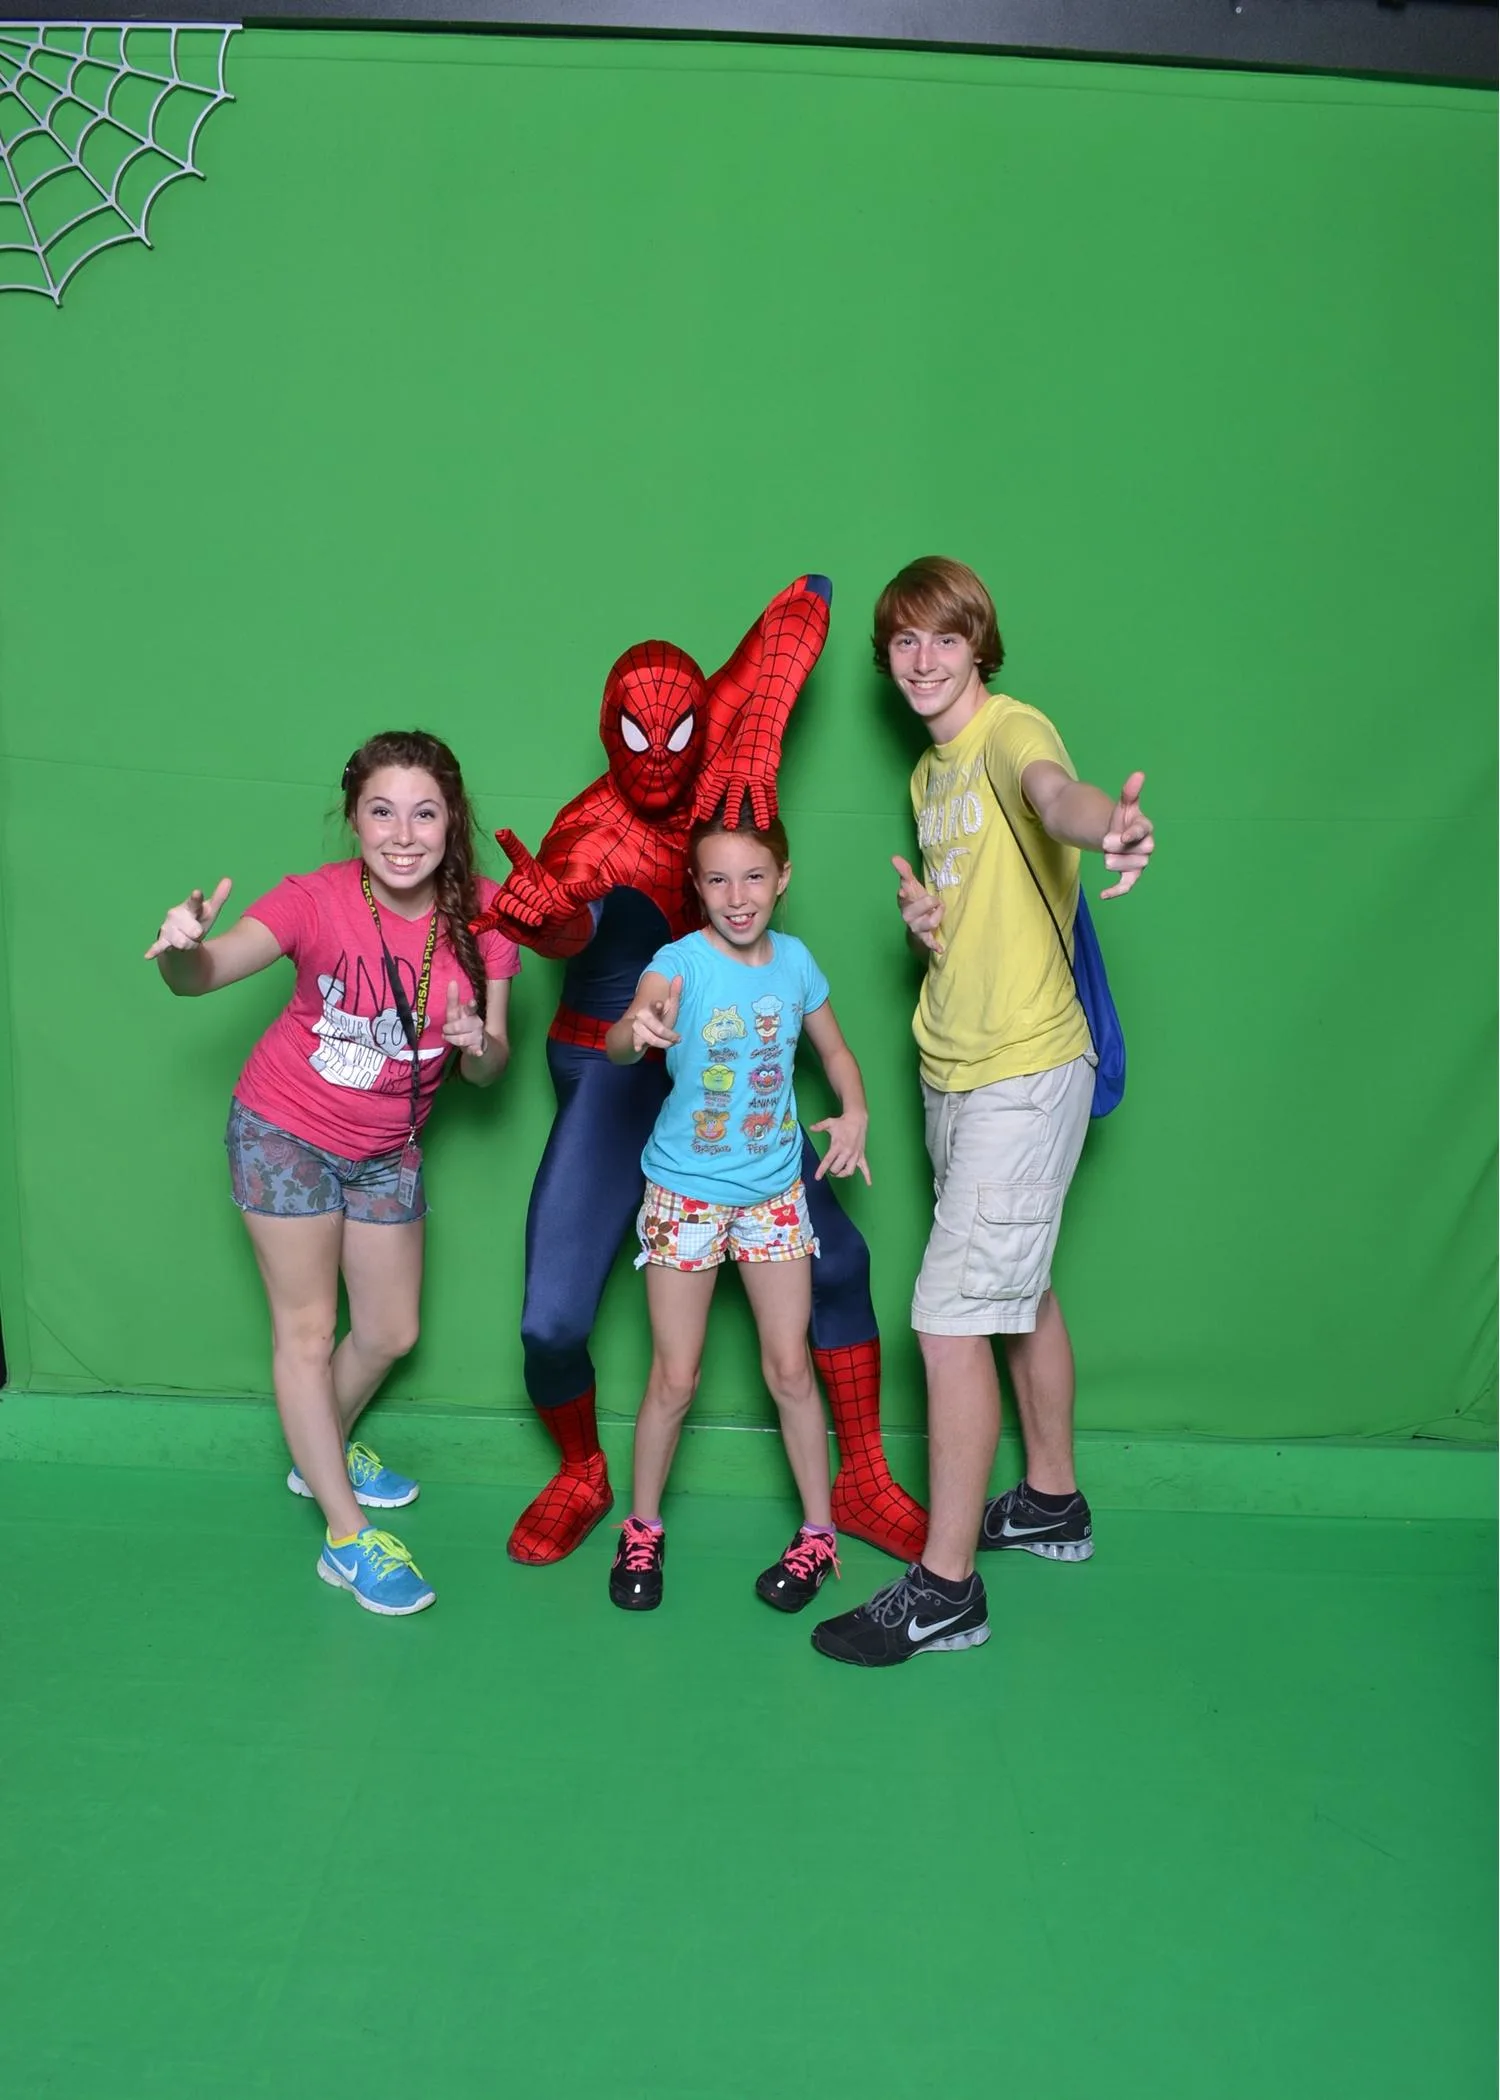 Universal Orlando, Universal Studios Florida, Spiderman, meet and greet